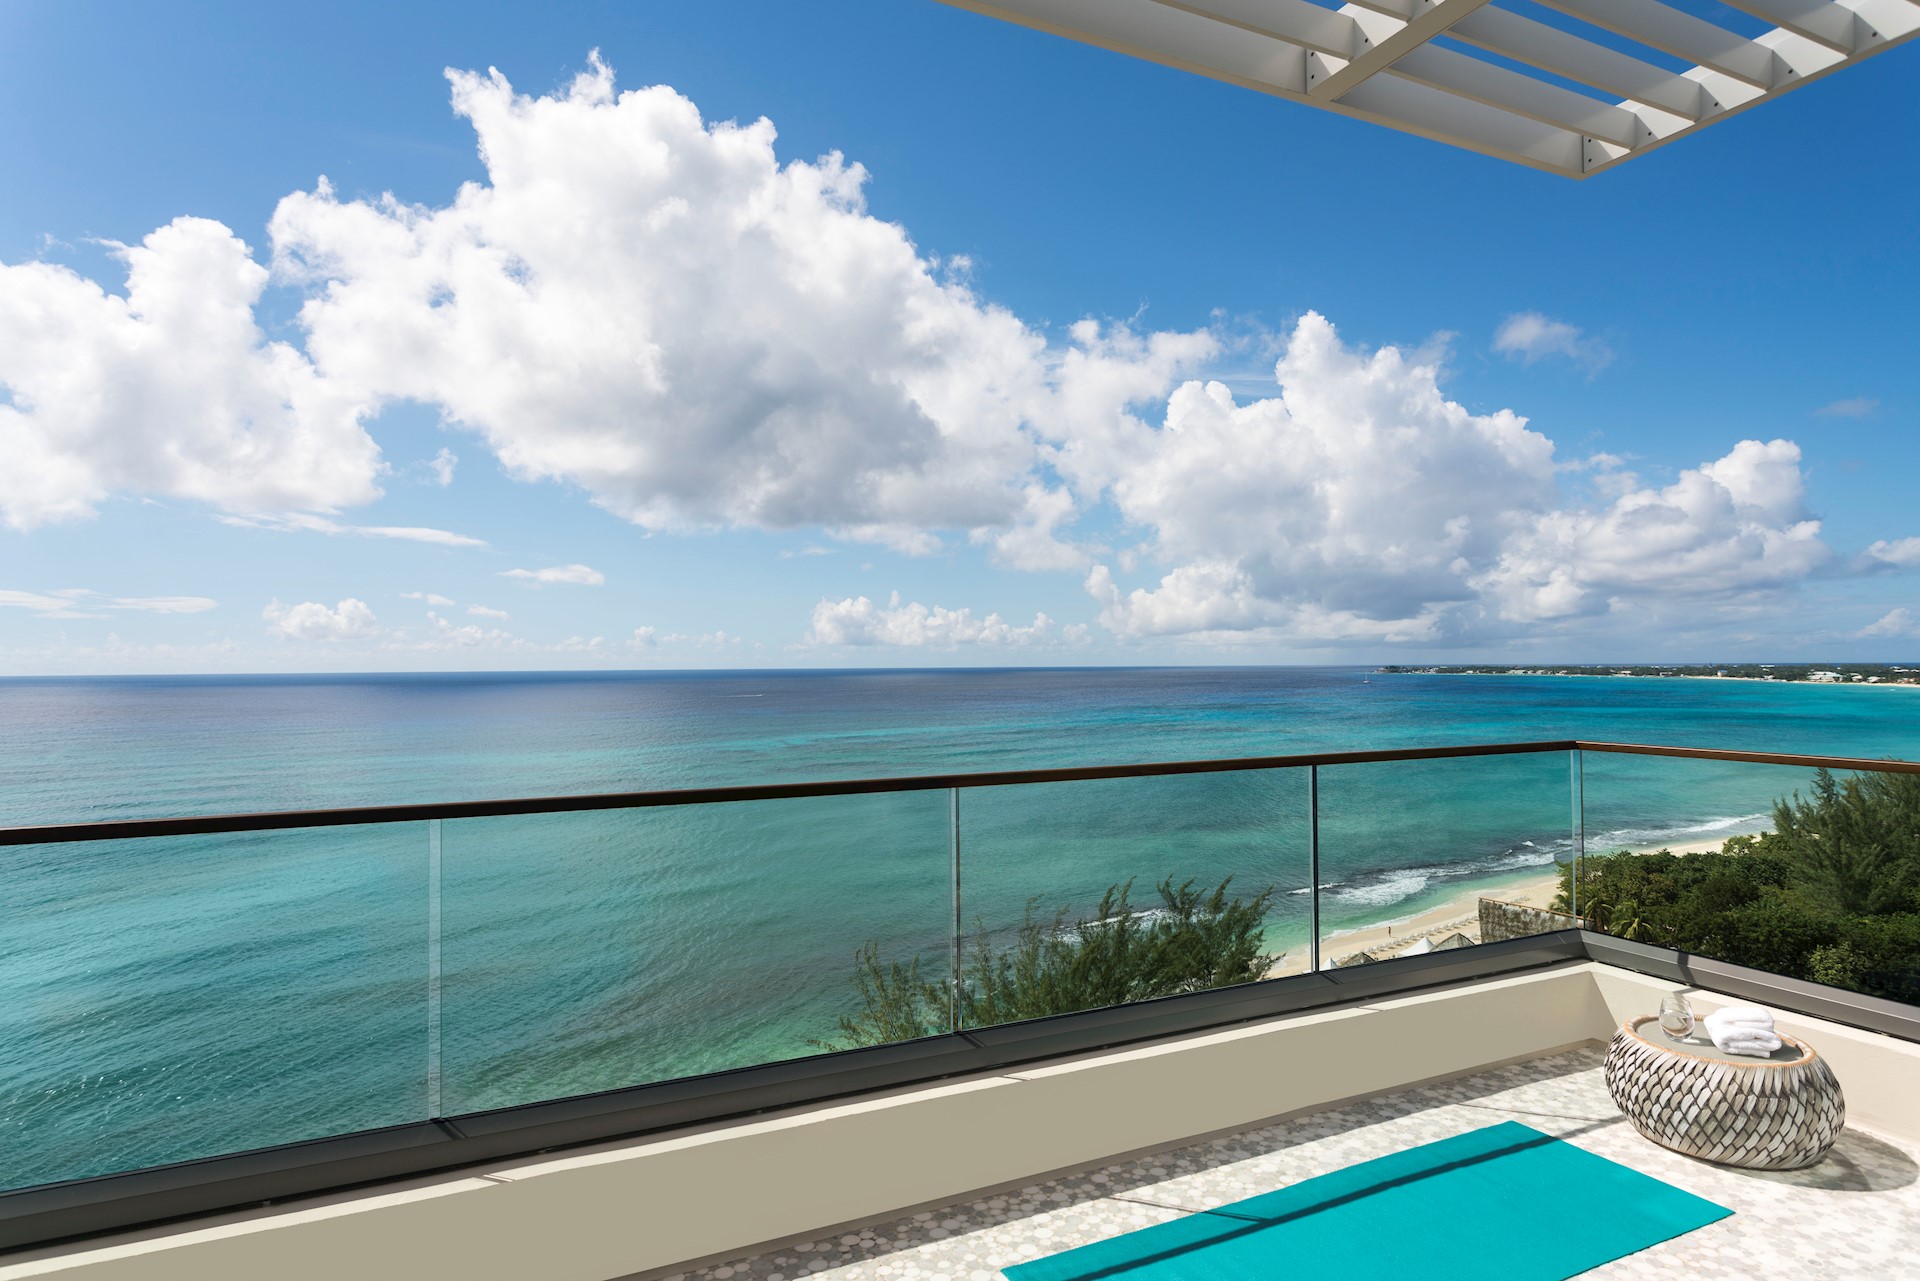 Luxury properties in the Cayman Islands